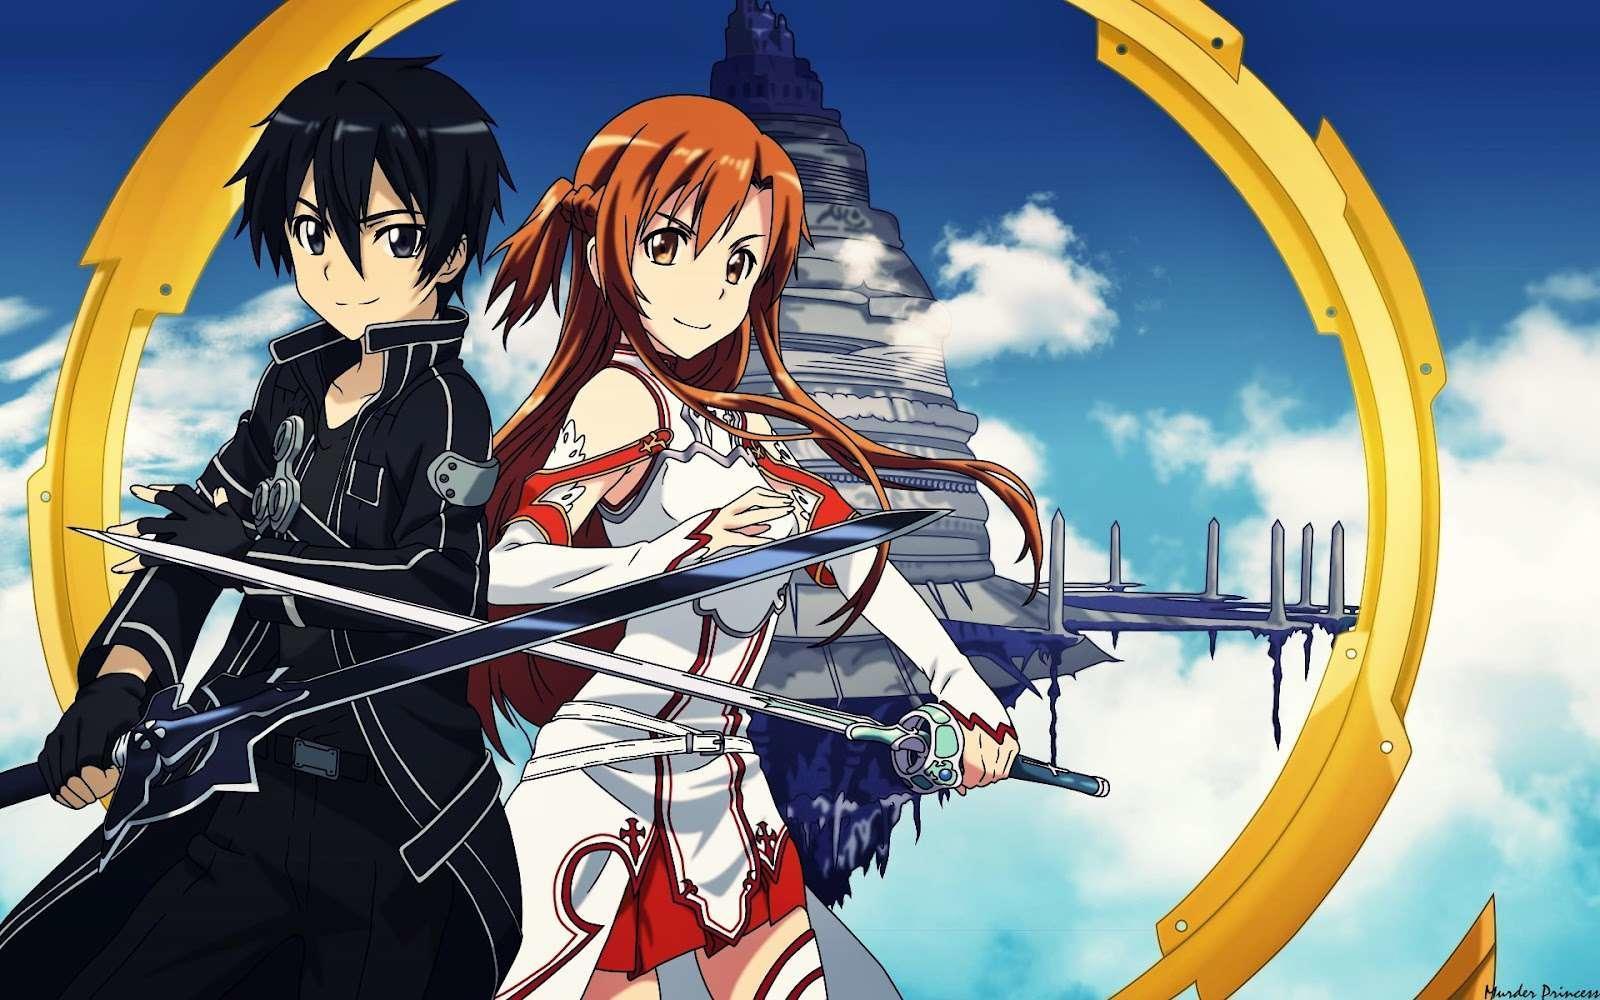 Sword Art Online  Watch on Funimation